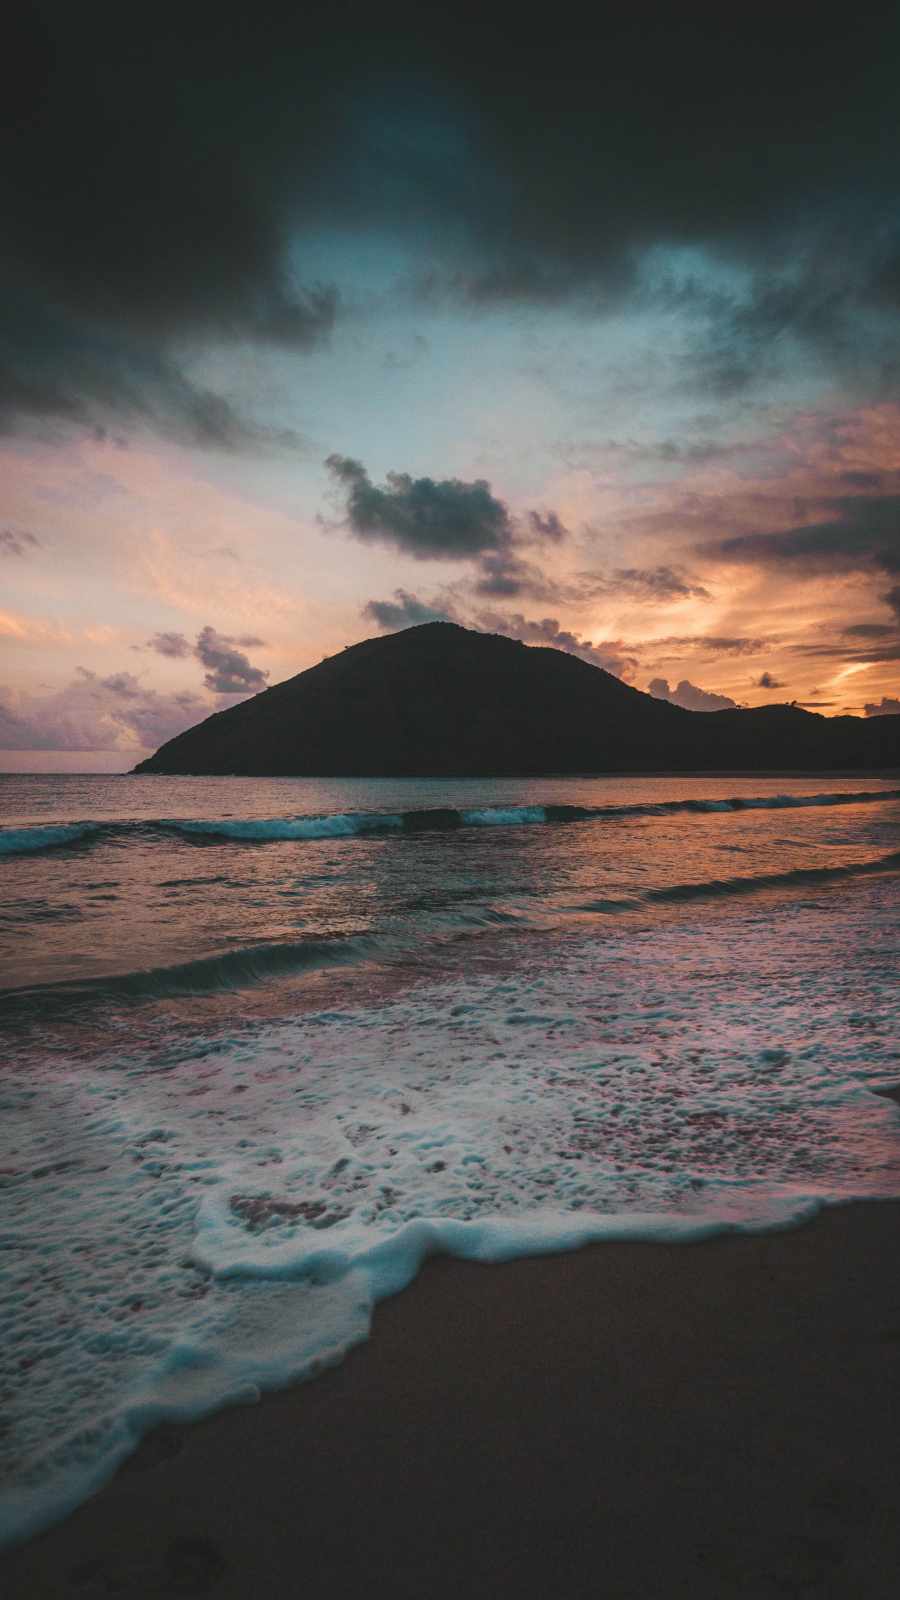 A sunset over a mountain and the ocean - Beach, mountain